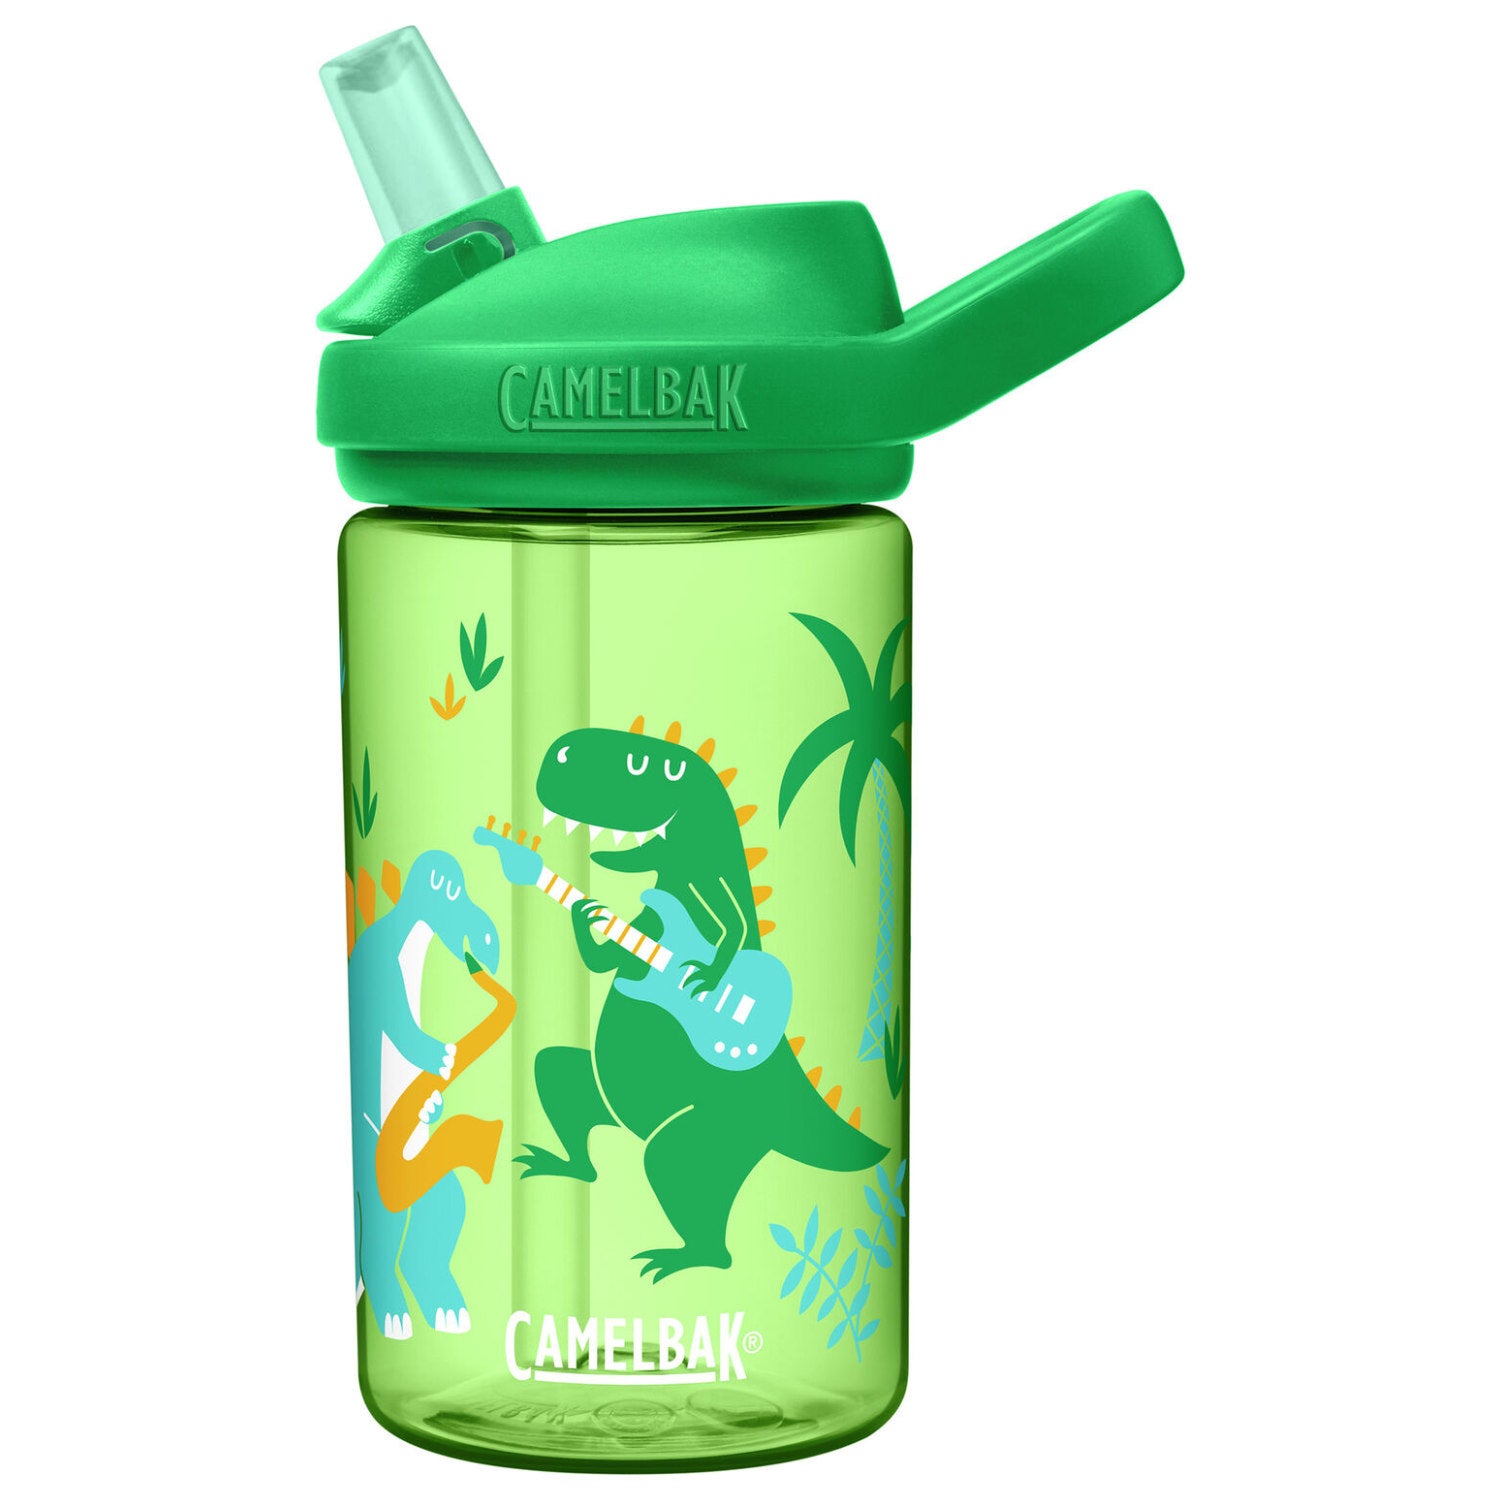 CamelBak Eddy+ Kids Hip Dinos Water Bottle, 14 oz.